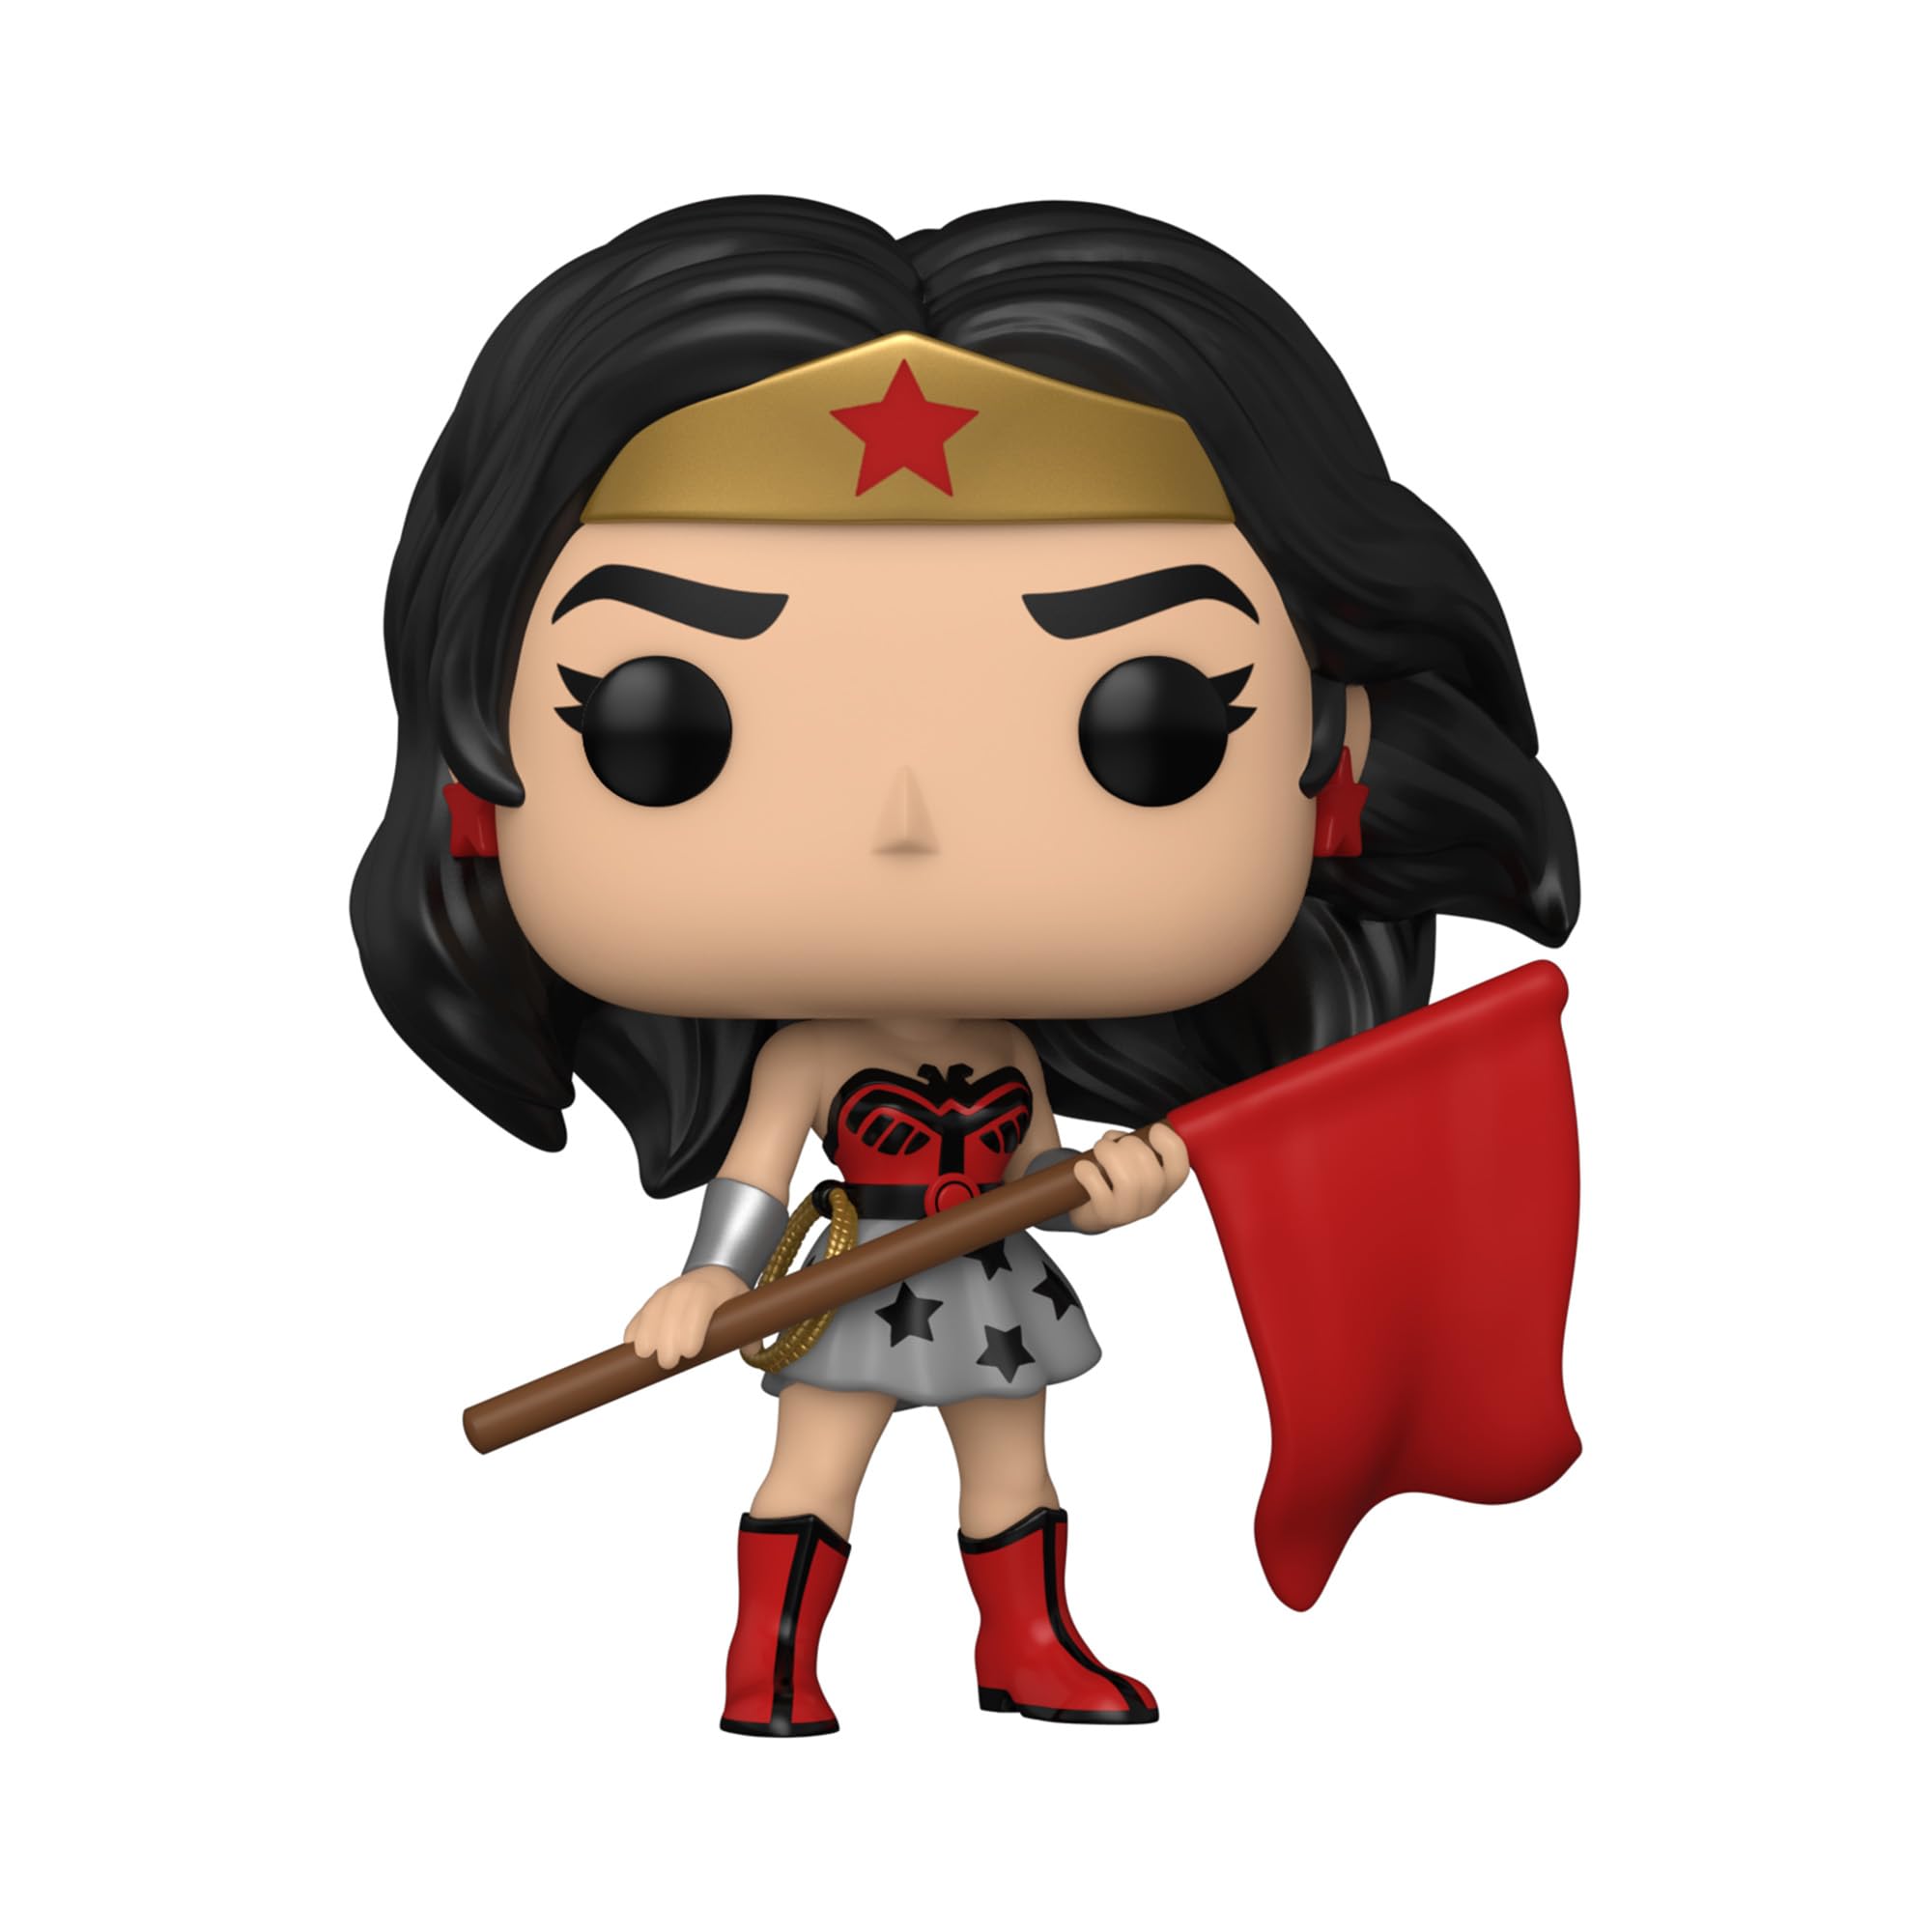 Funko POP Heroes: DC Comics, Wonder Woman 80th Anniversary - Red Son Wonder Woman, Multicolor (54976)